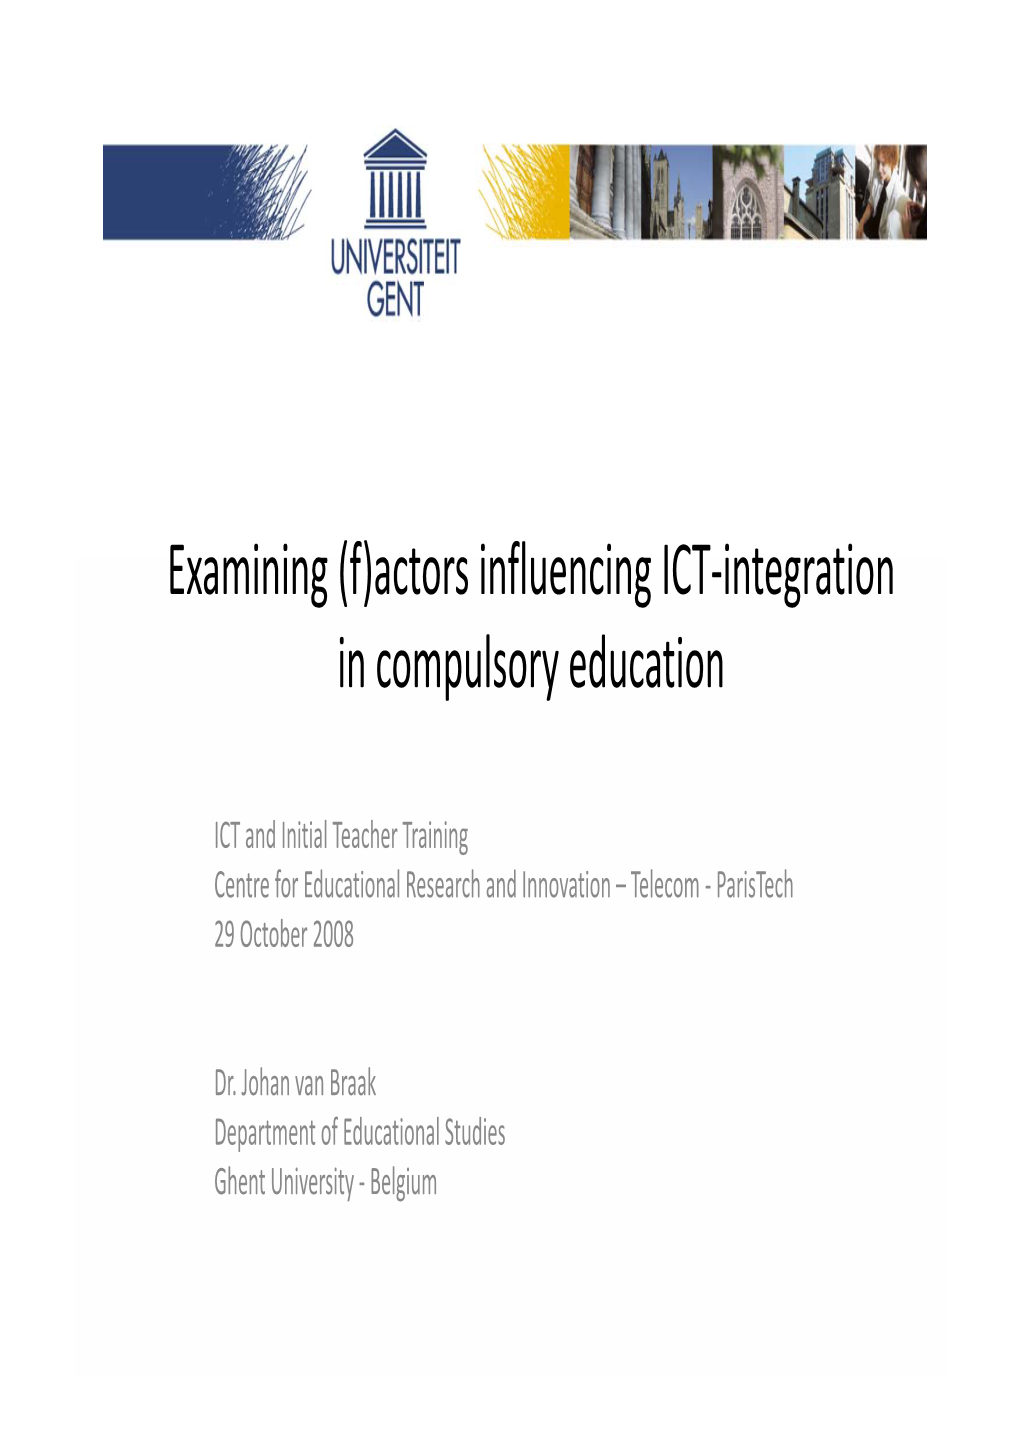 Actors Influencing ICT-Integration in Compulsory Education